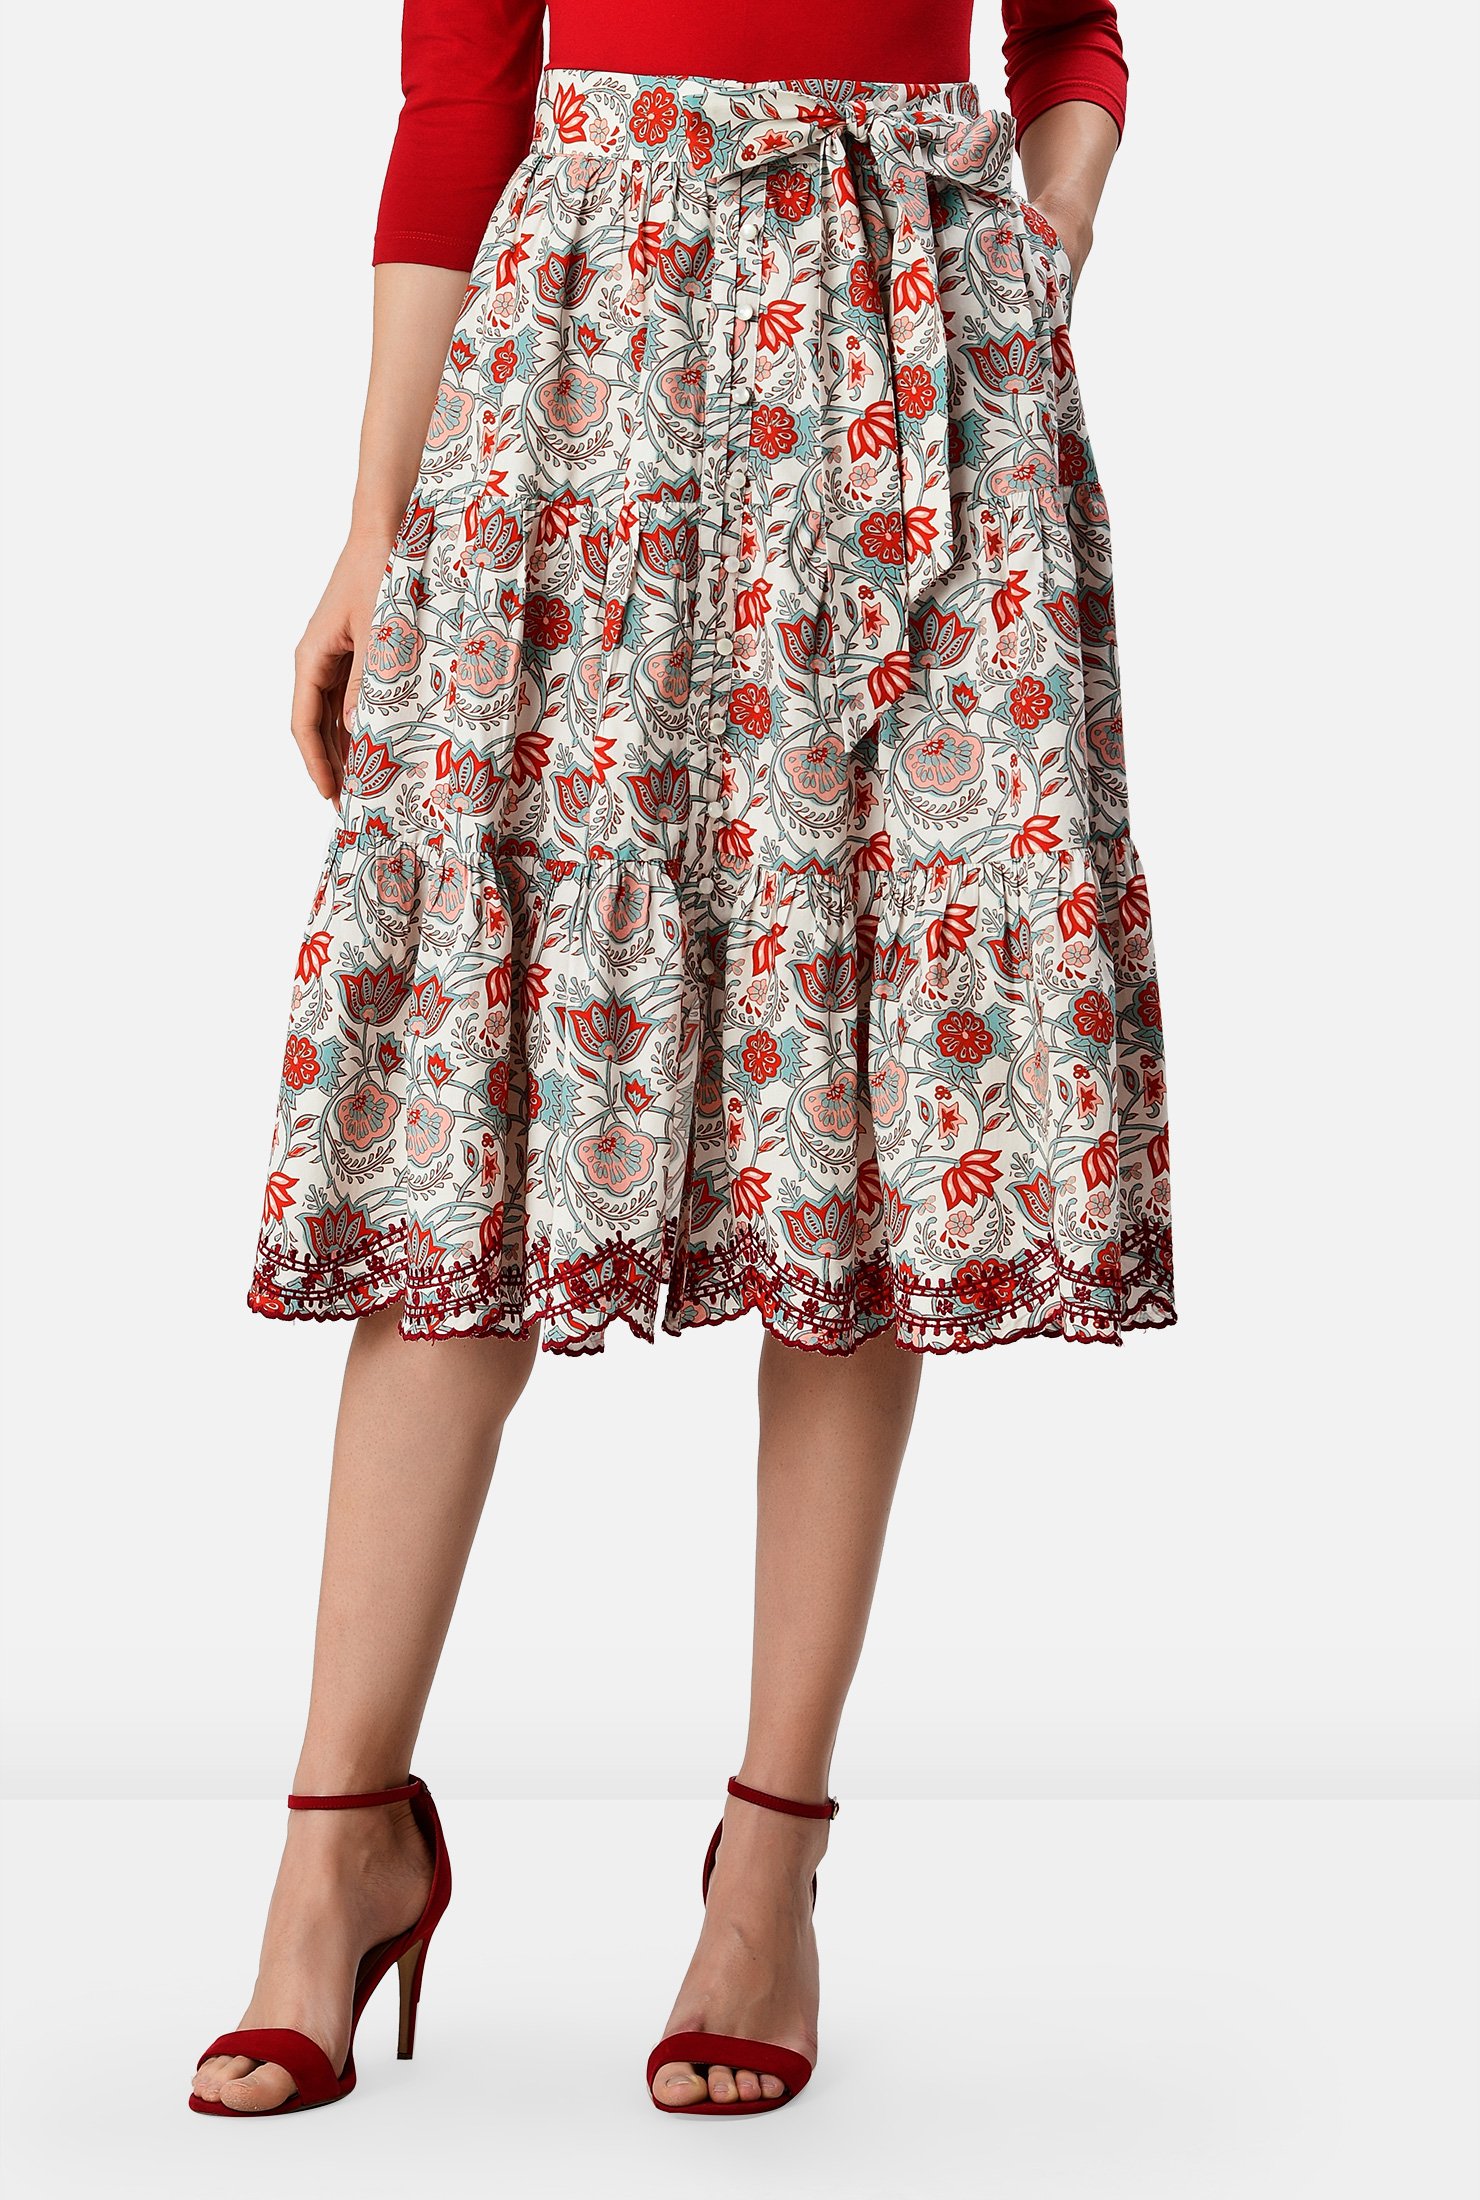 embroidered skirt australia